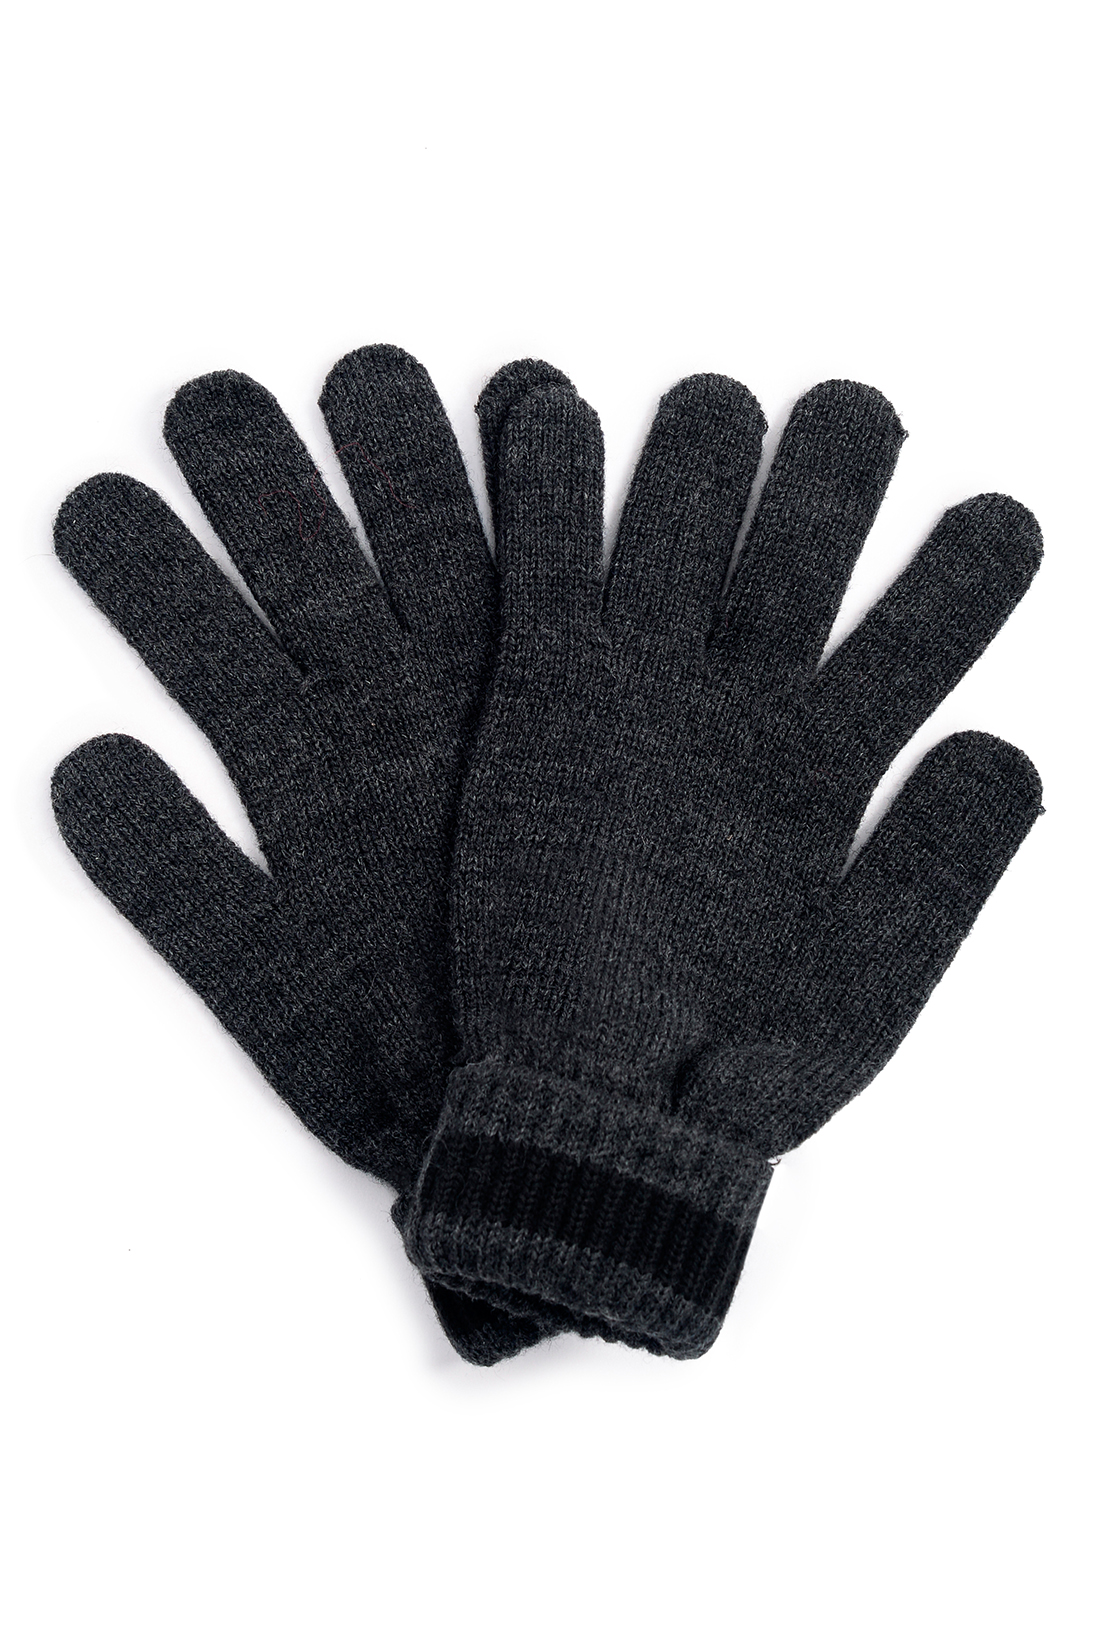 Перчатки с полосками (арт. baon B869502), размер Без/раз, цвет marengo melange#серый